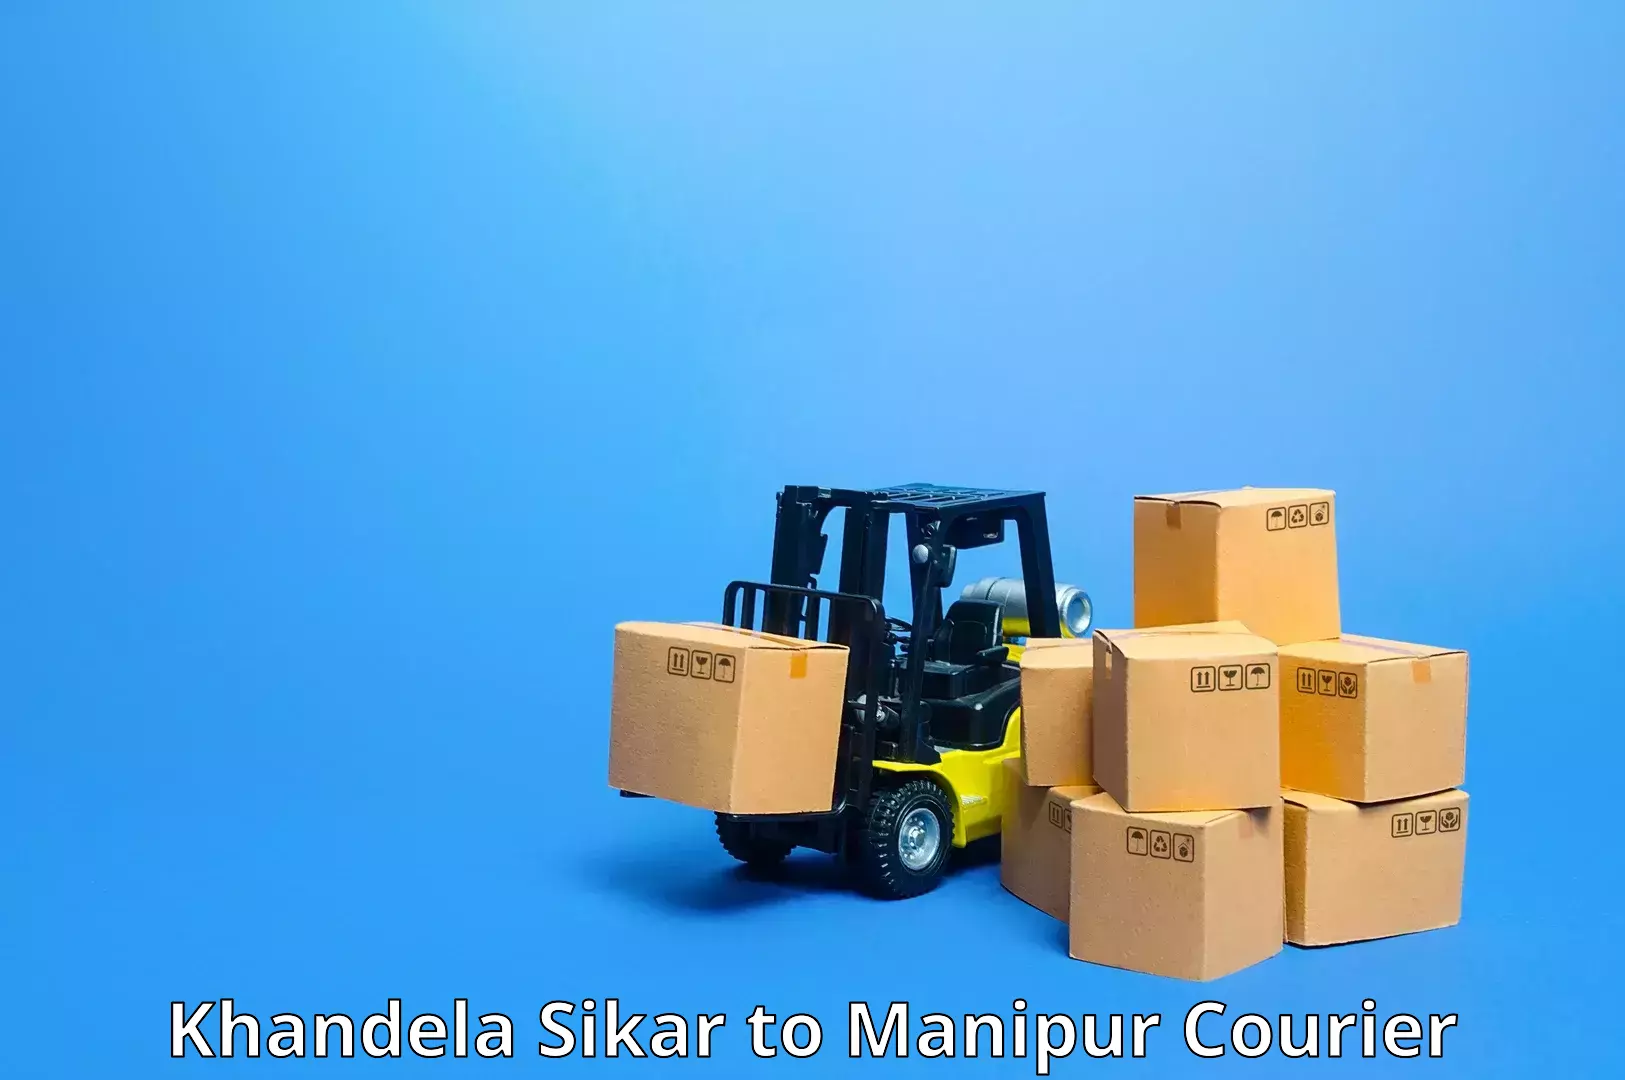 On-demand shipping options in Khandela Sikar to Chandel